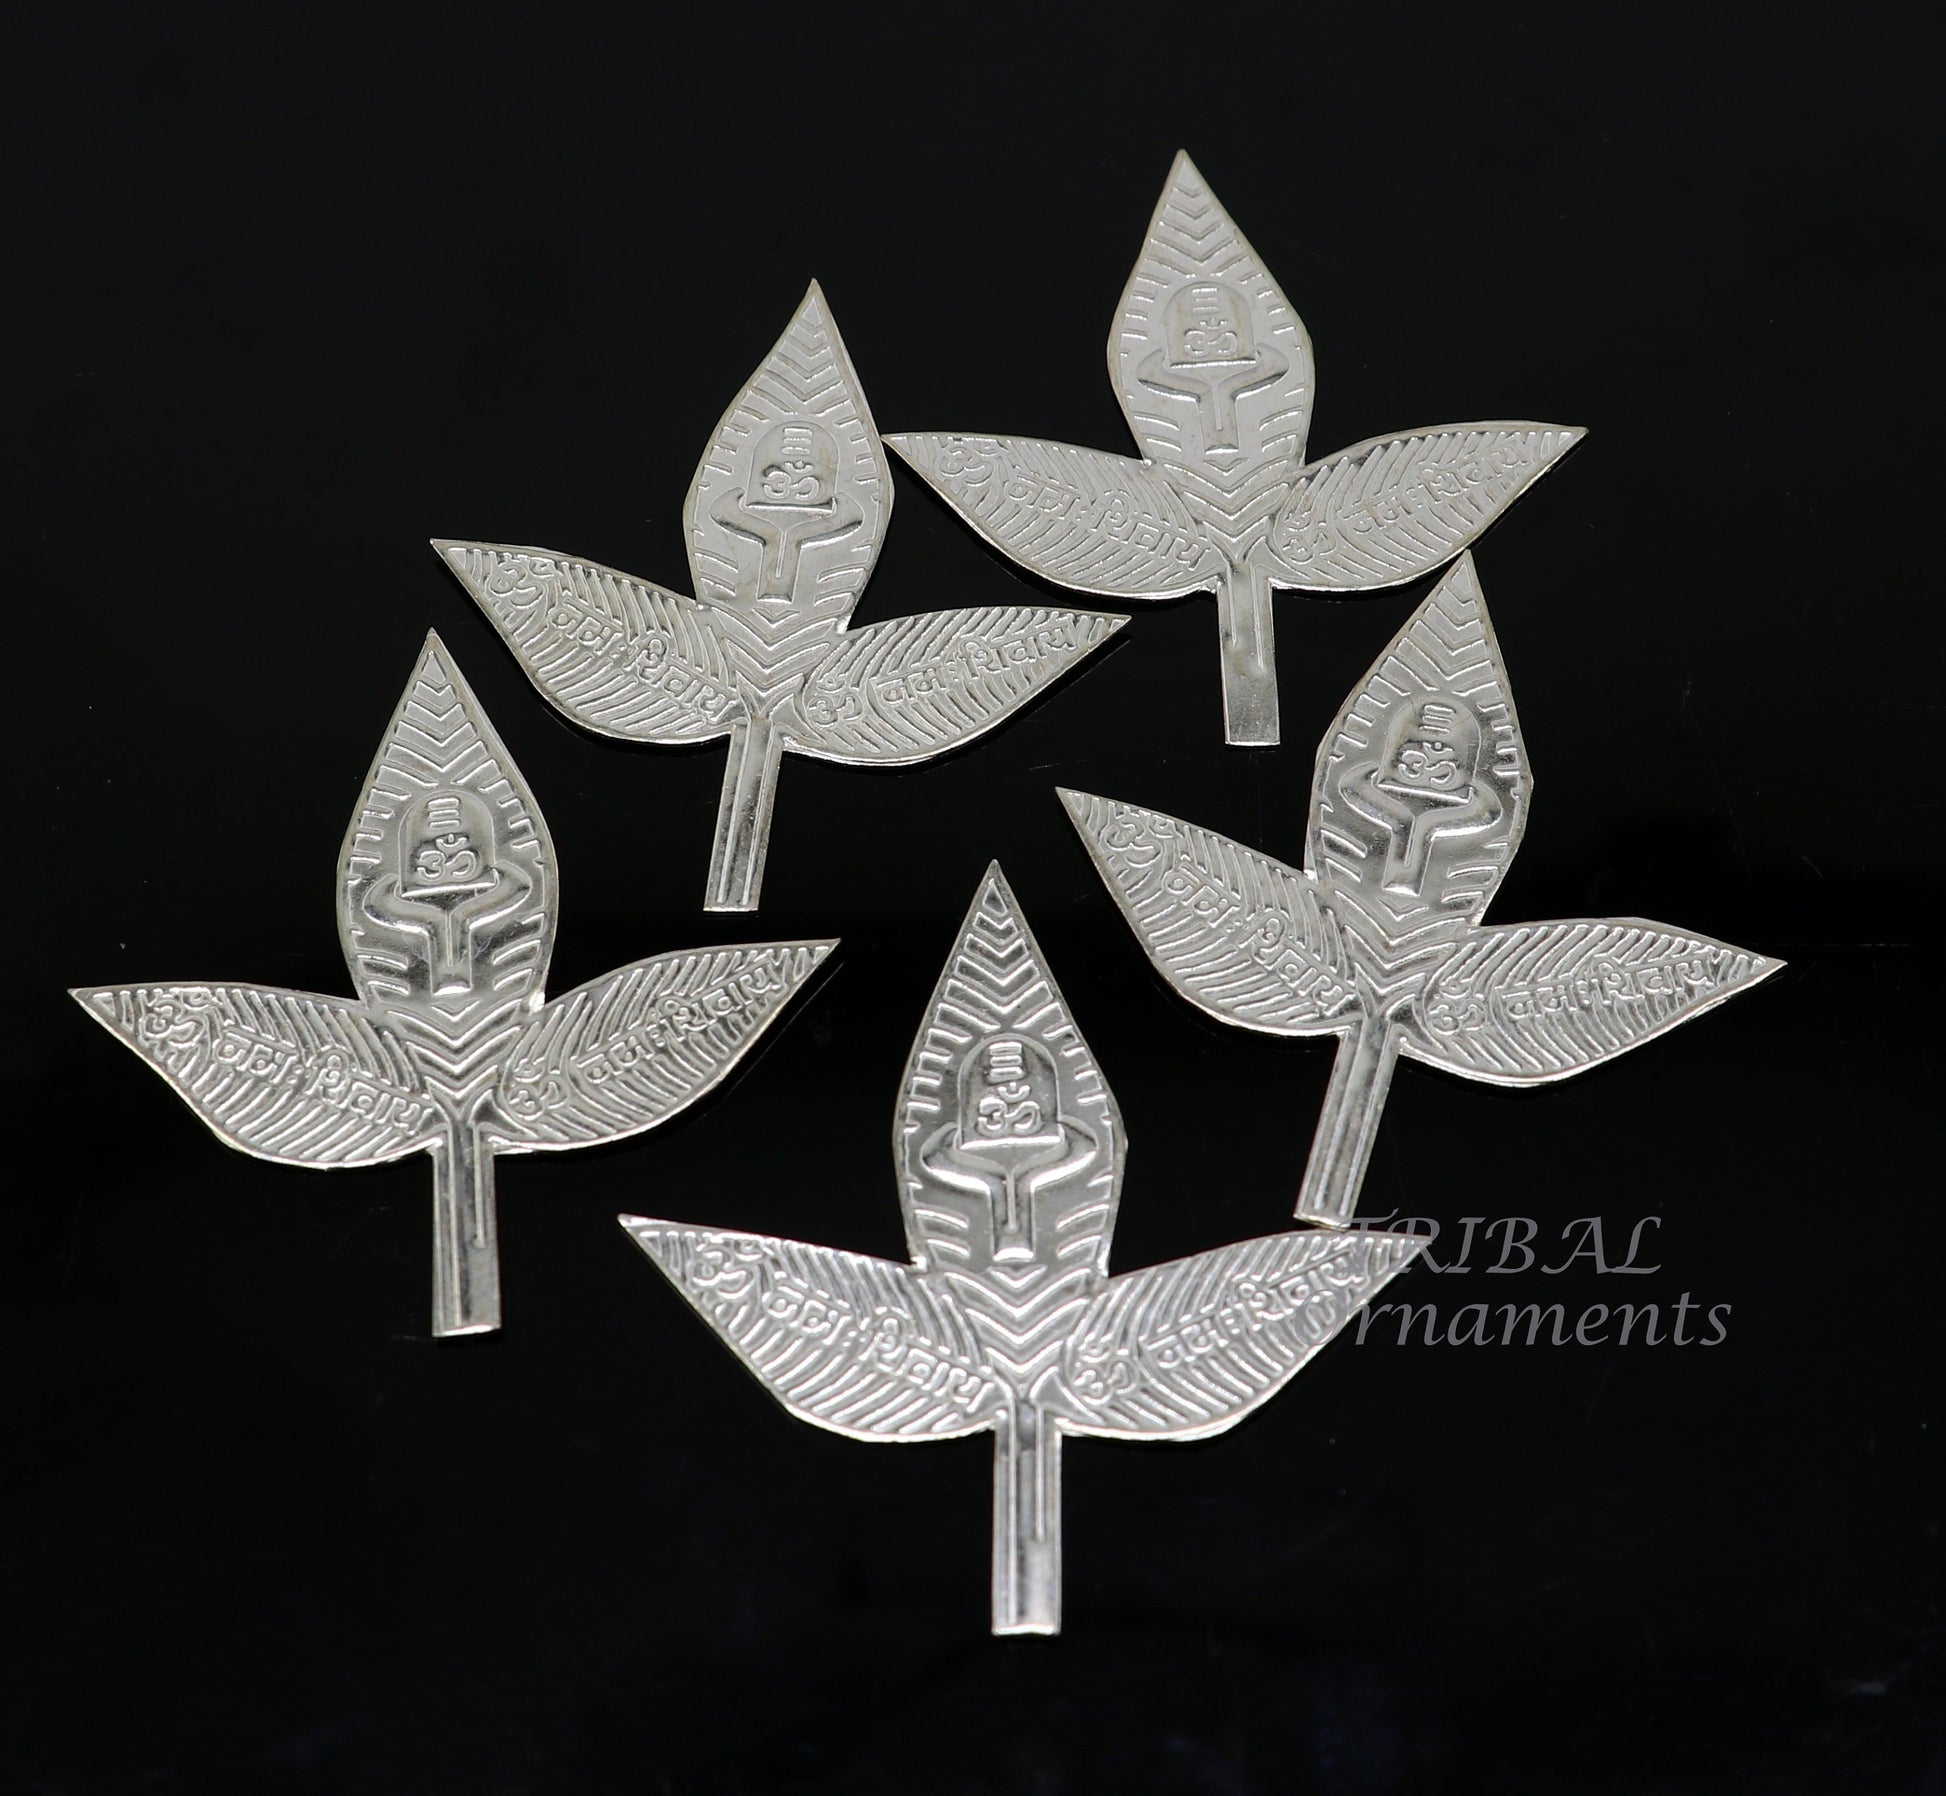 5.5cm Lord Shiva bel Patra Solid silver handmade solid belva patra, shiva worshipping/ puja article, bel tree leaves for puja su964 - TRIBAL ORNAMENTS